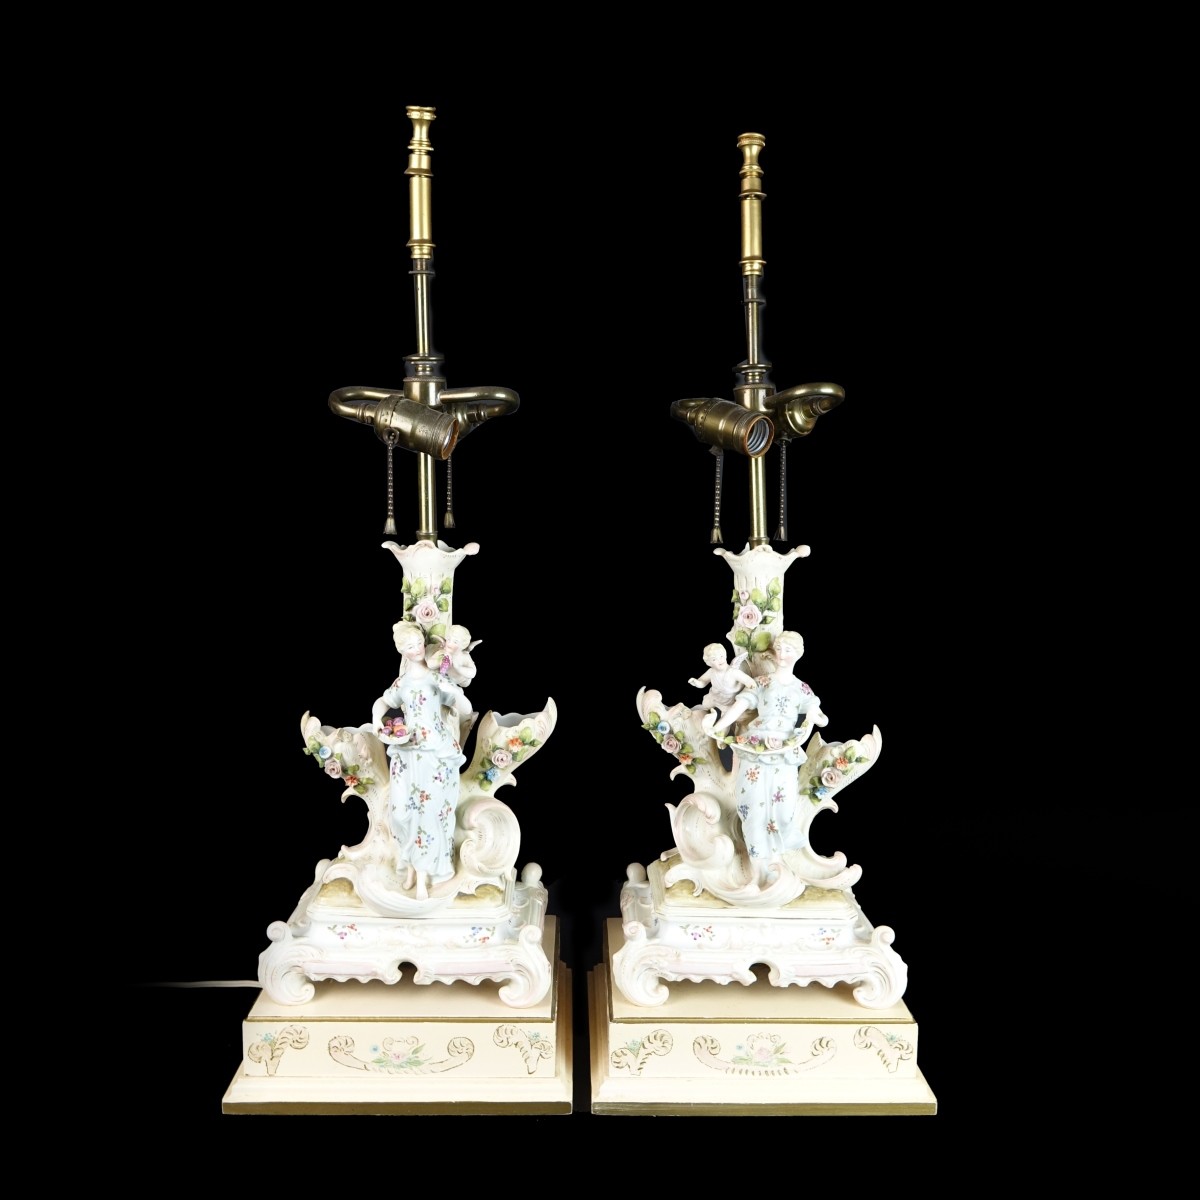 Pair of German Candlesticks Mounted as lamps